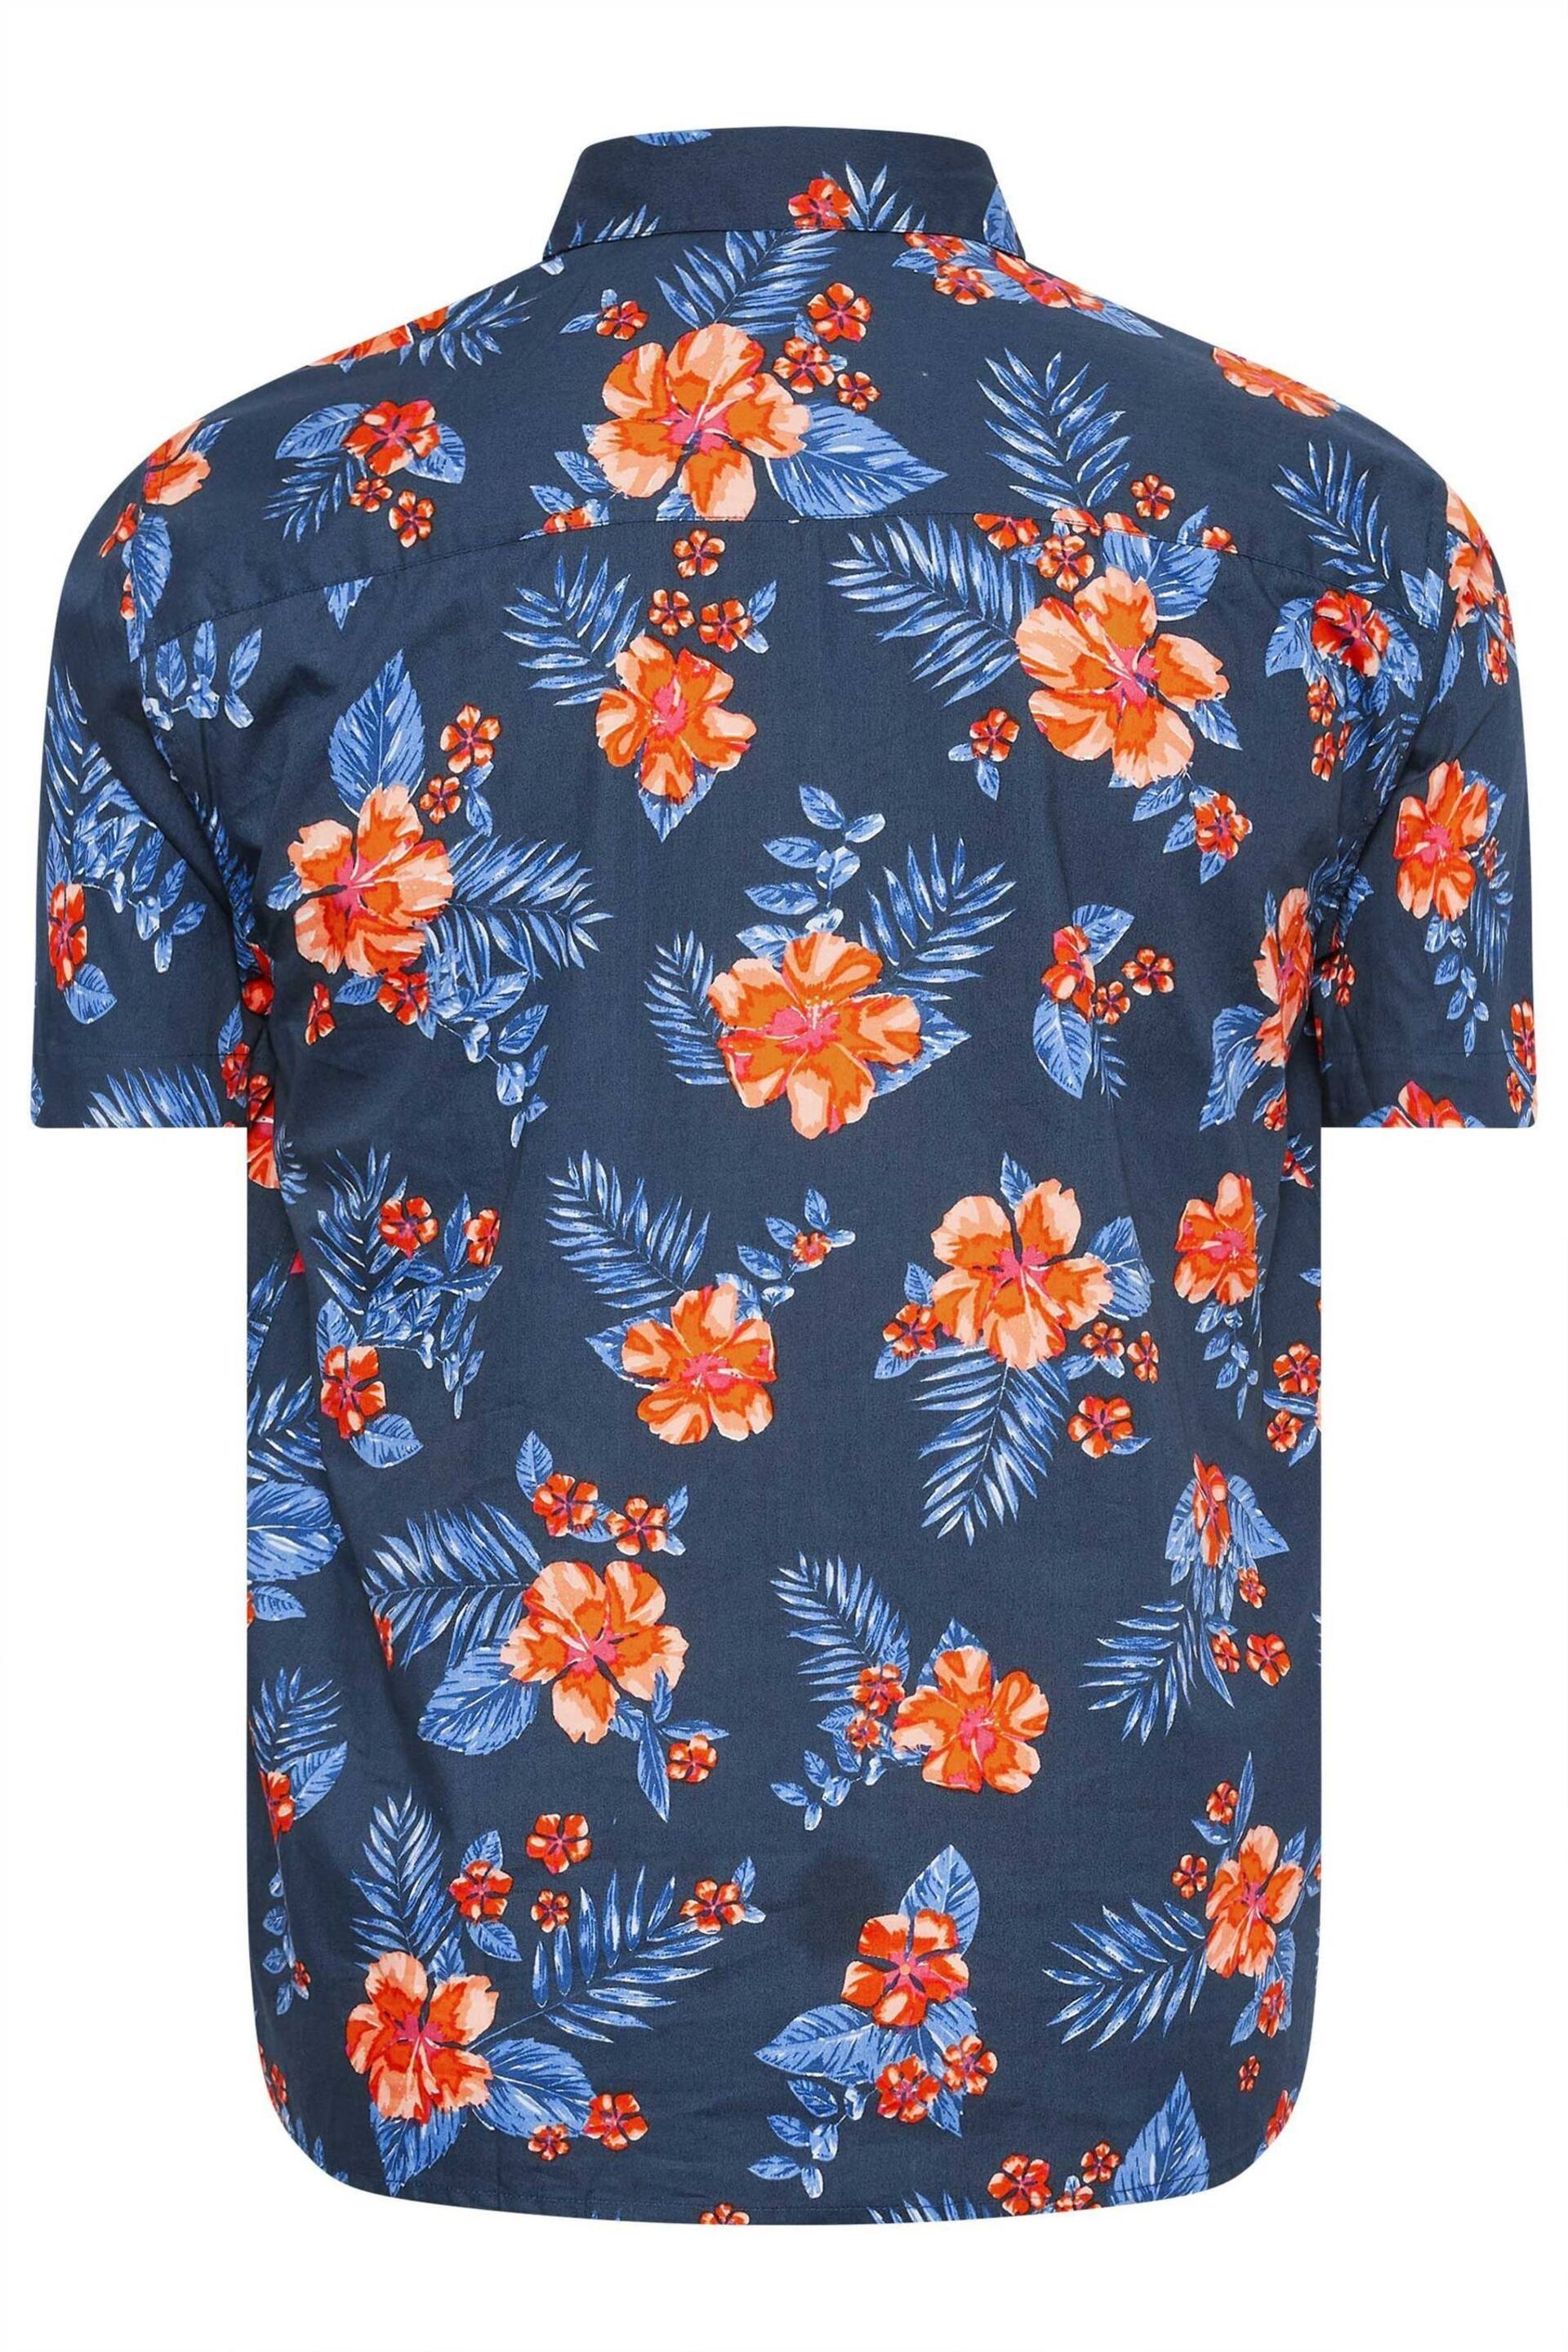 BadRhino Big & Tall Navy Blue & Orange Tropical Shirt - Image 3 of 3